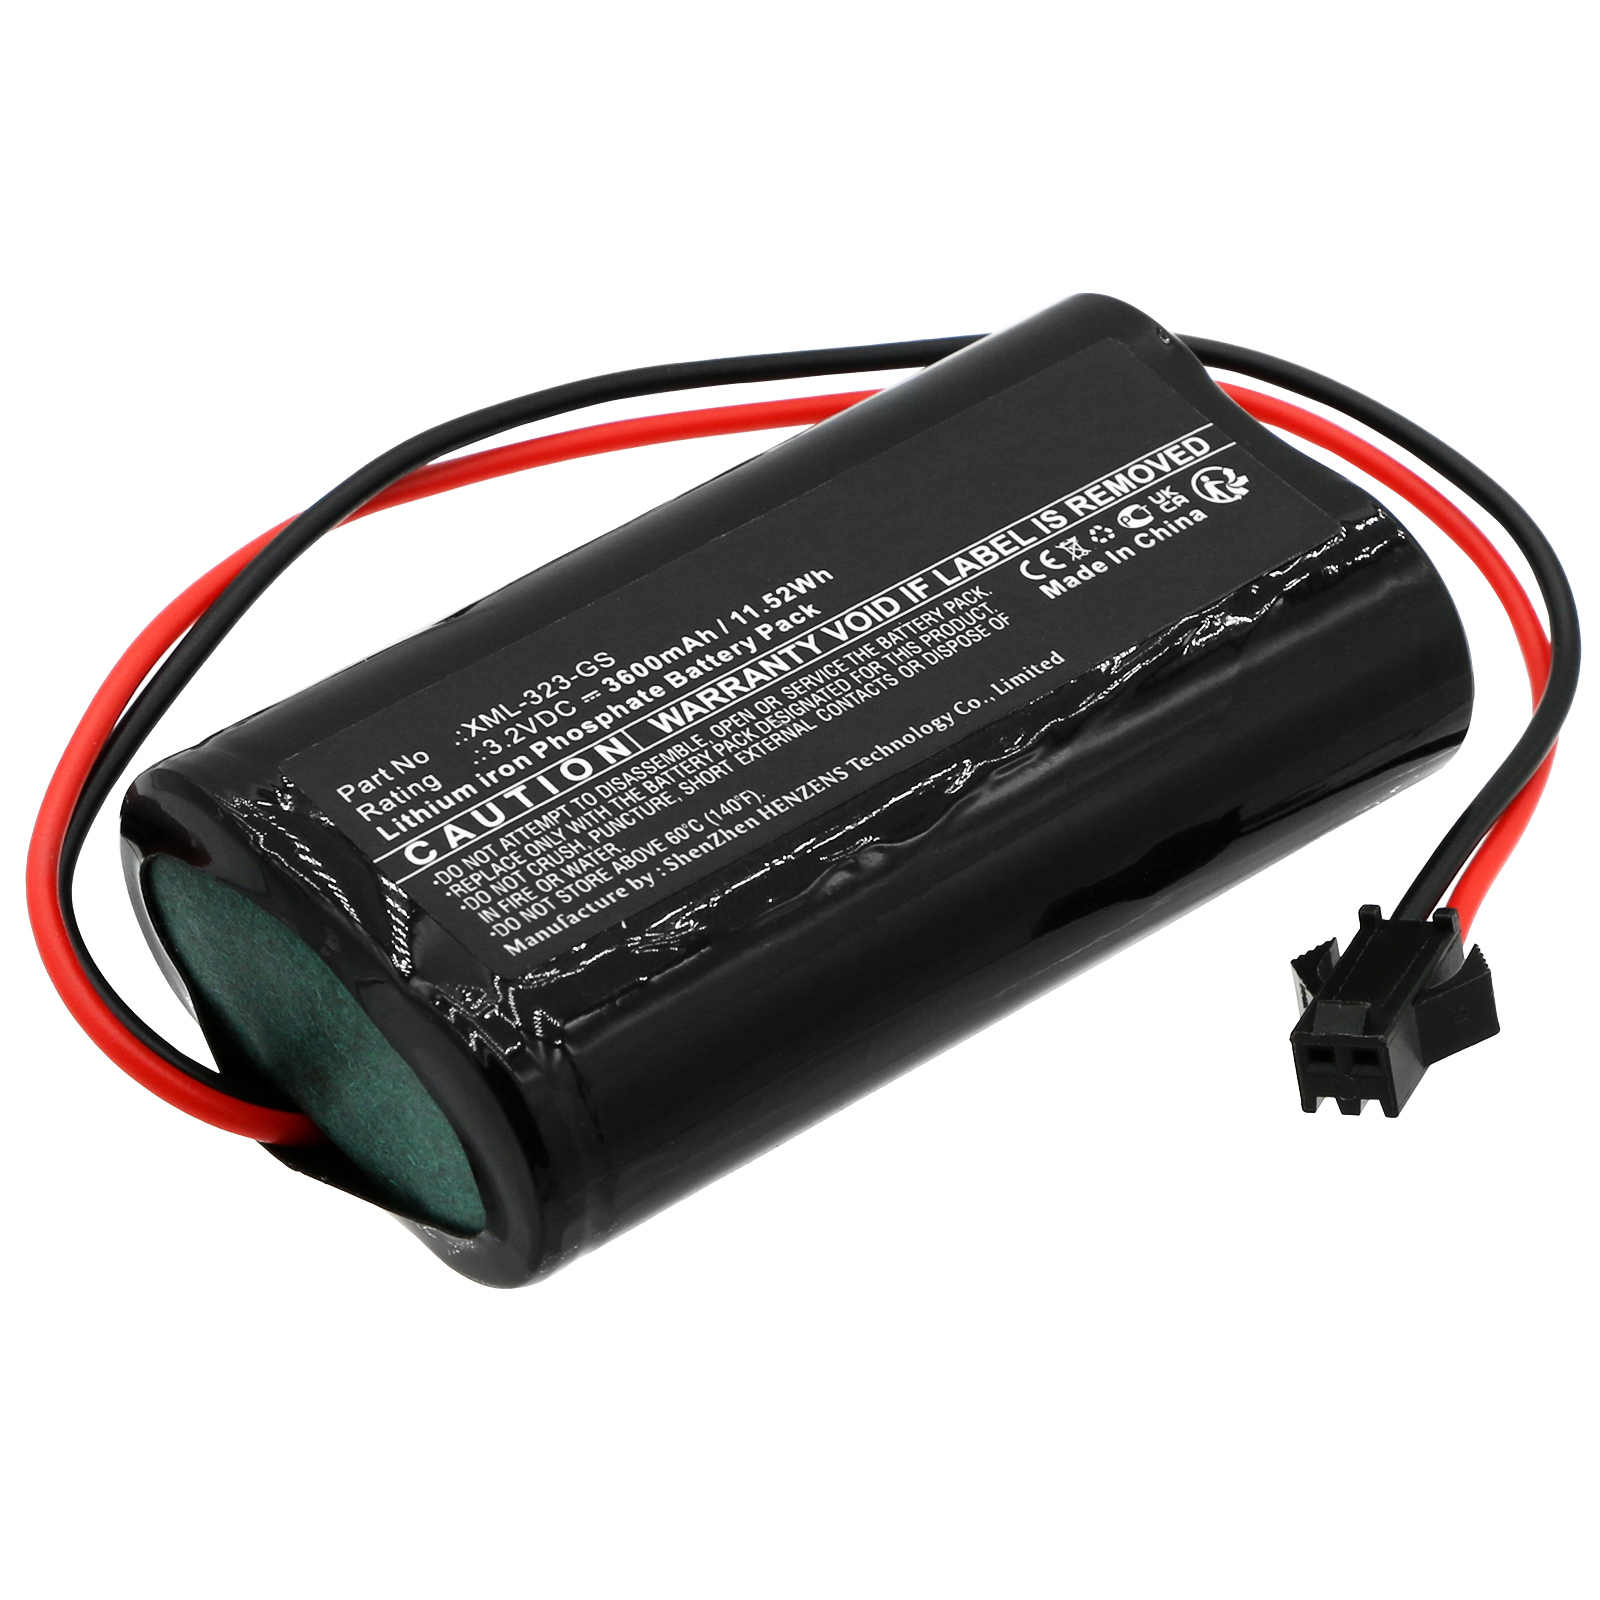 Synergy Digital Solar Battery, Compatible with Gama Sonic XML-323-GS Solar Battery (LiFePO4, 3.2V, 3600mAh)